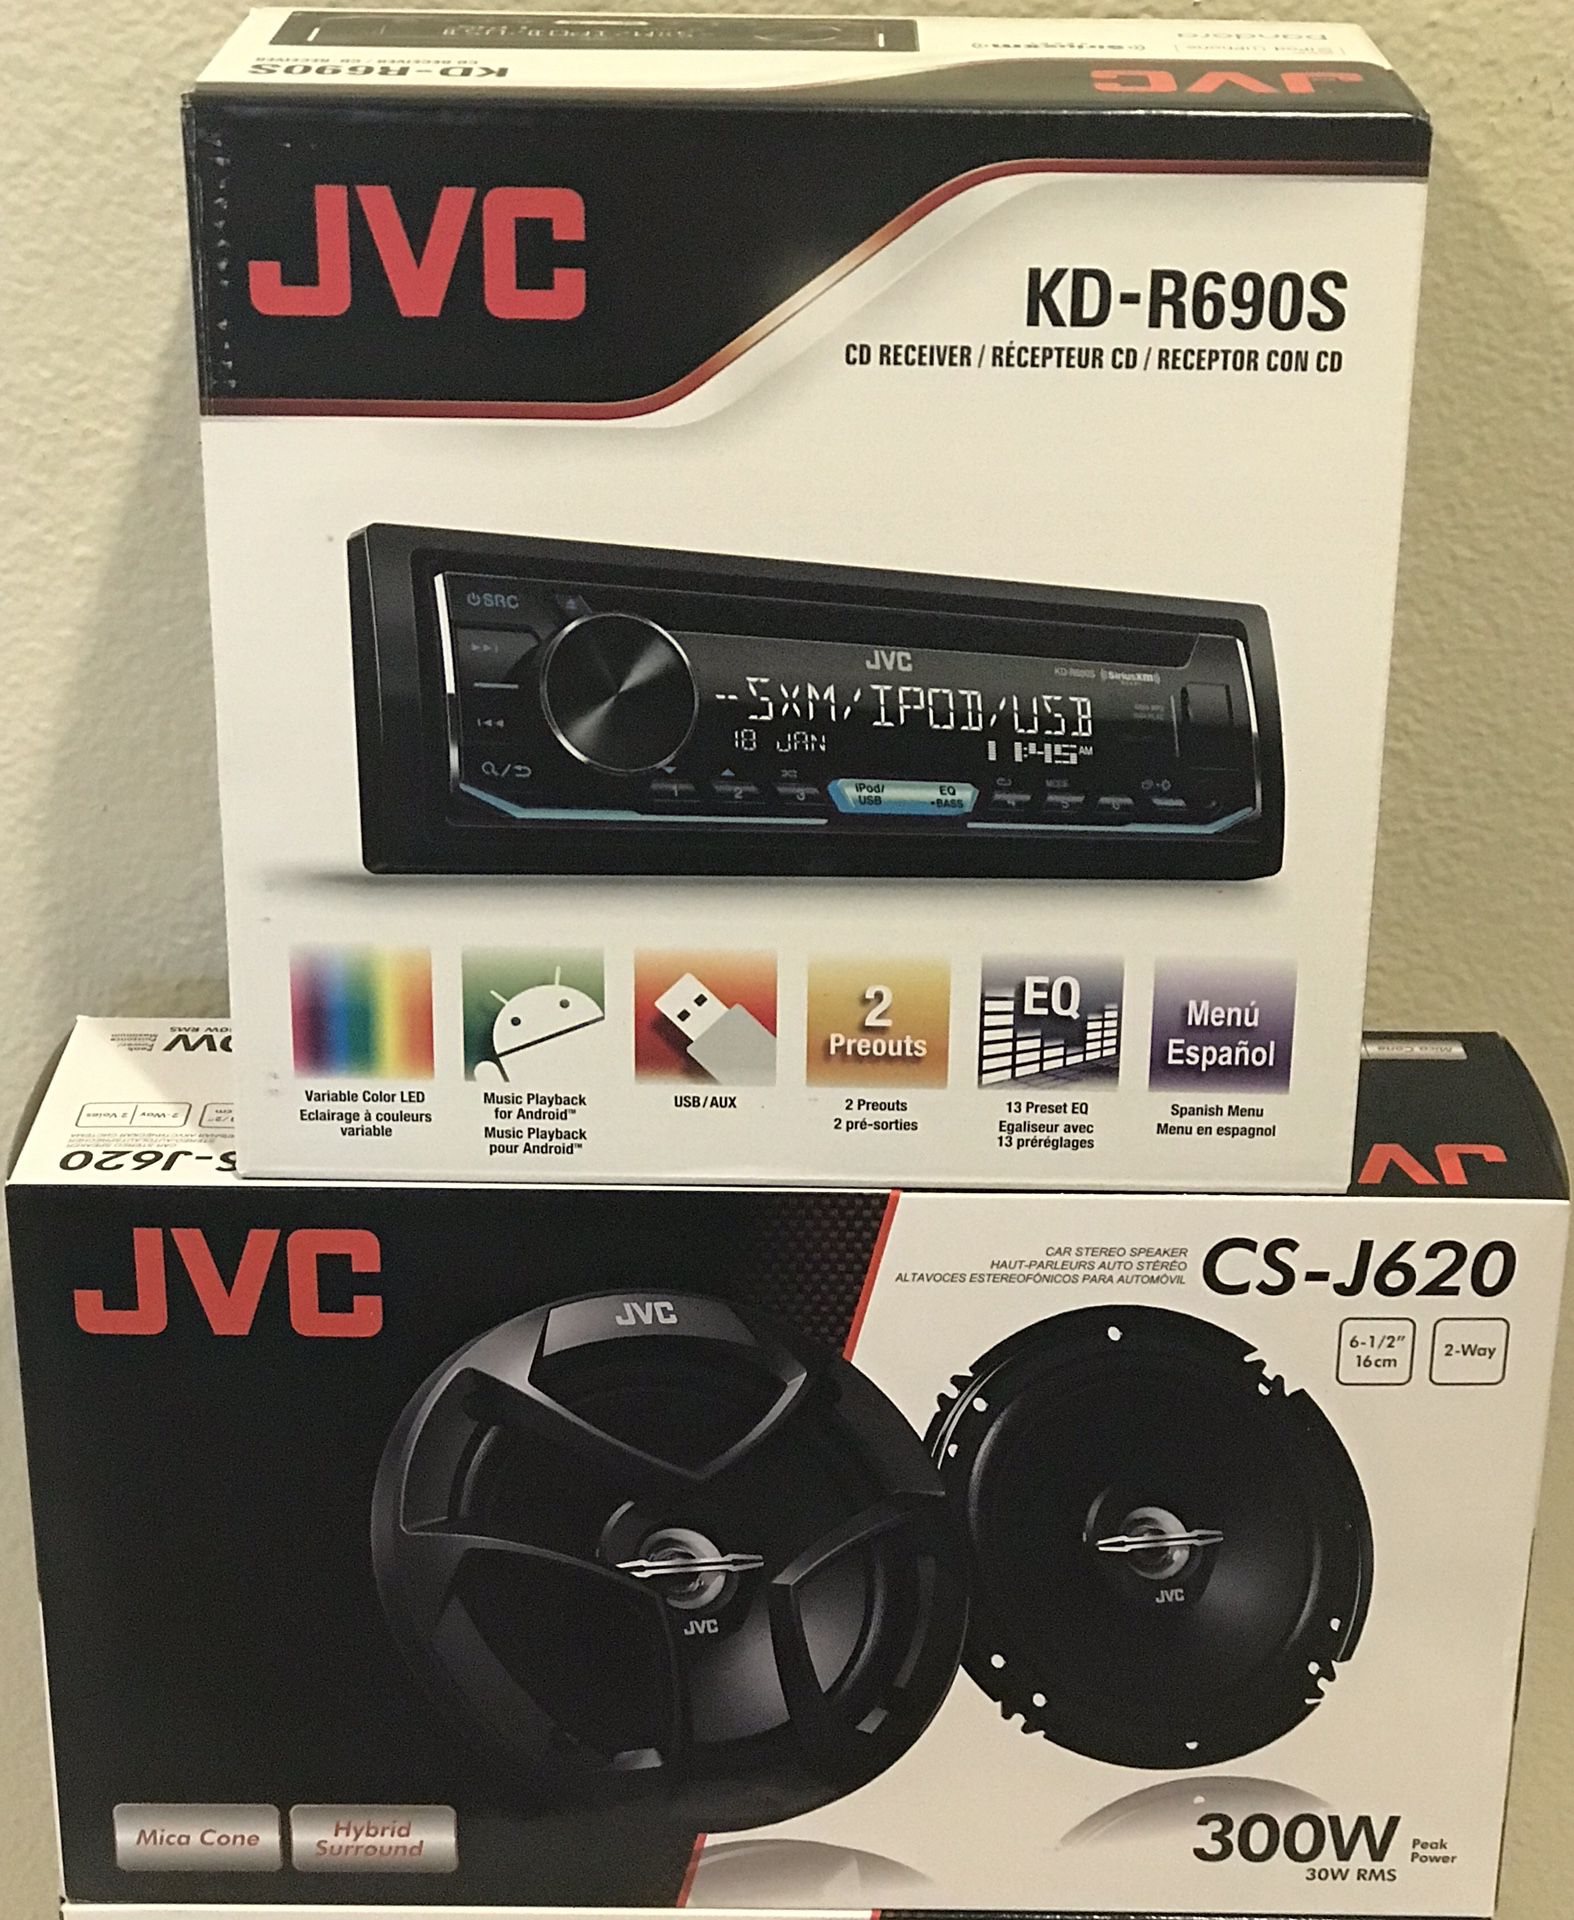 New JVC 200 Watts Car Audio CD/MP3/USB/AUX/Pandora/Sirius XM Car Stereo Receiver + (2) JVC 6.5” inch Speakers Combo 🔊🔥